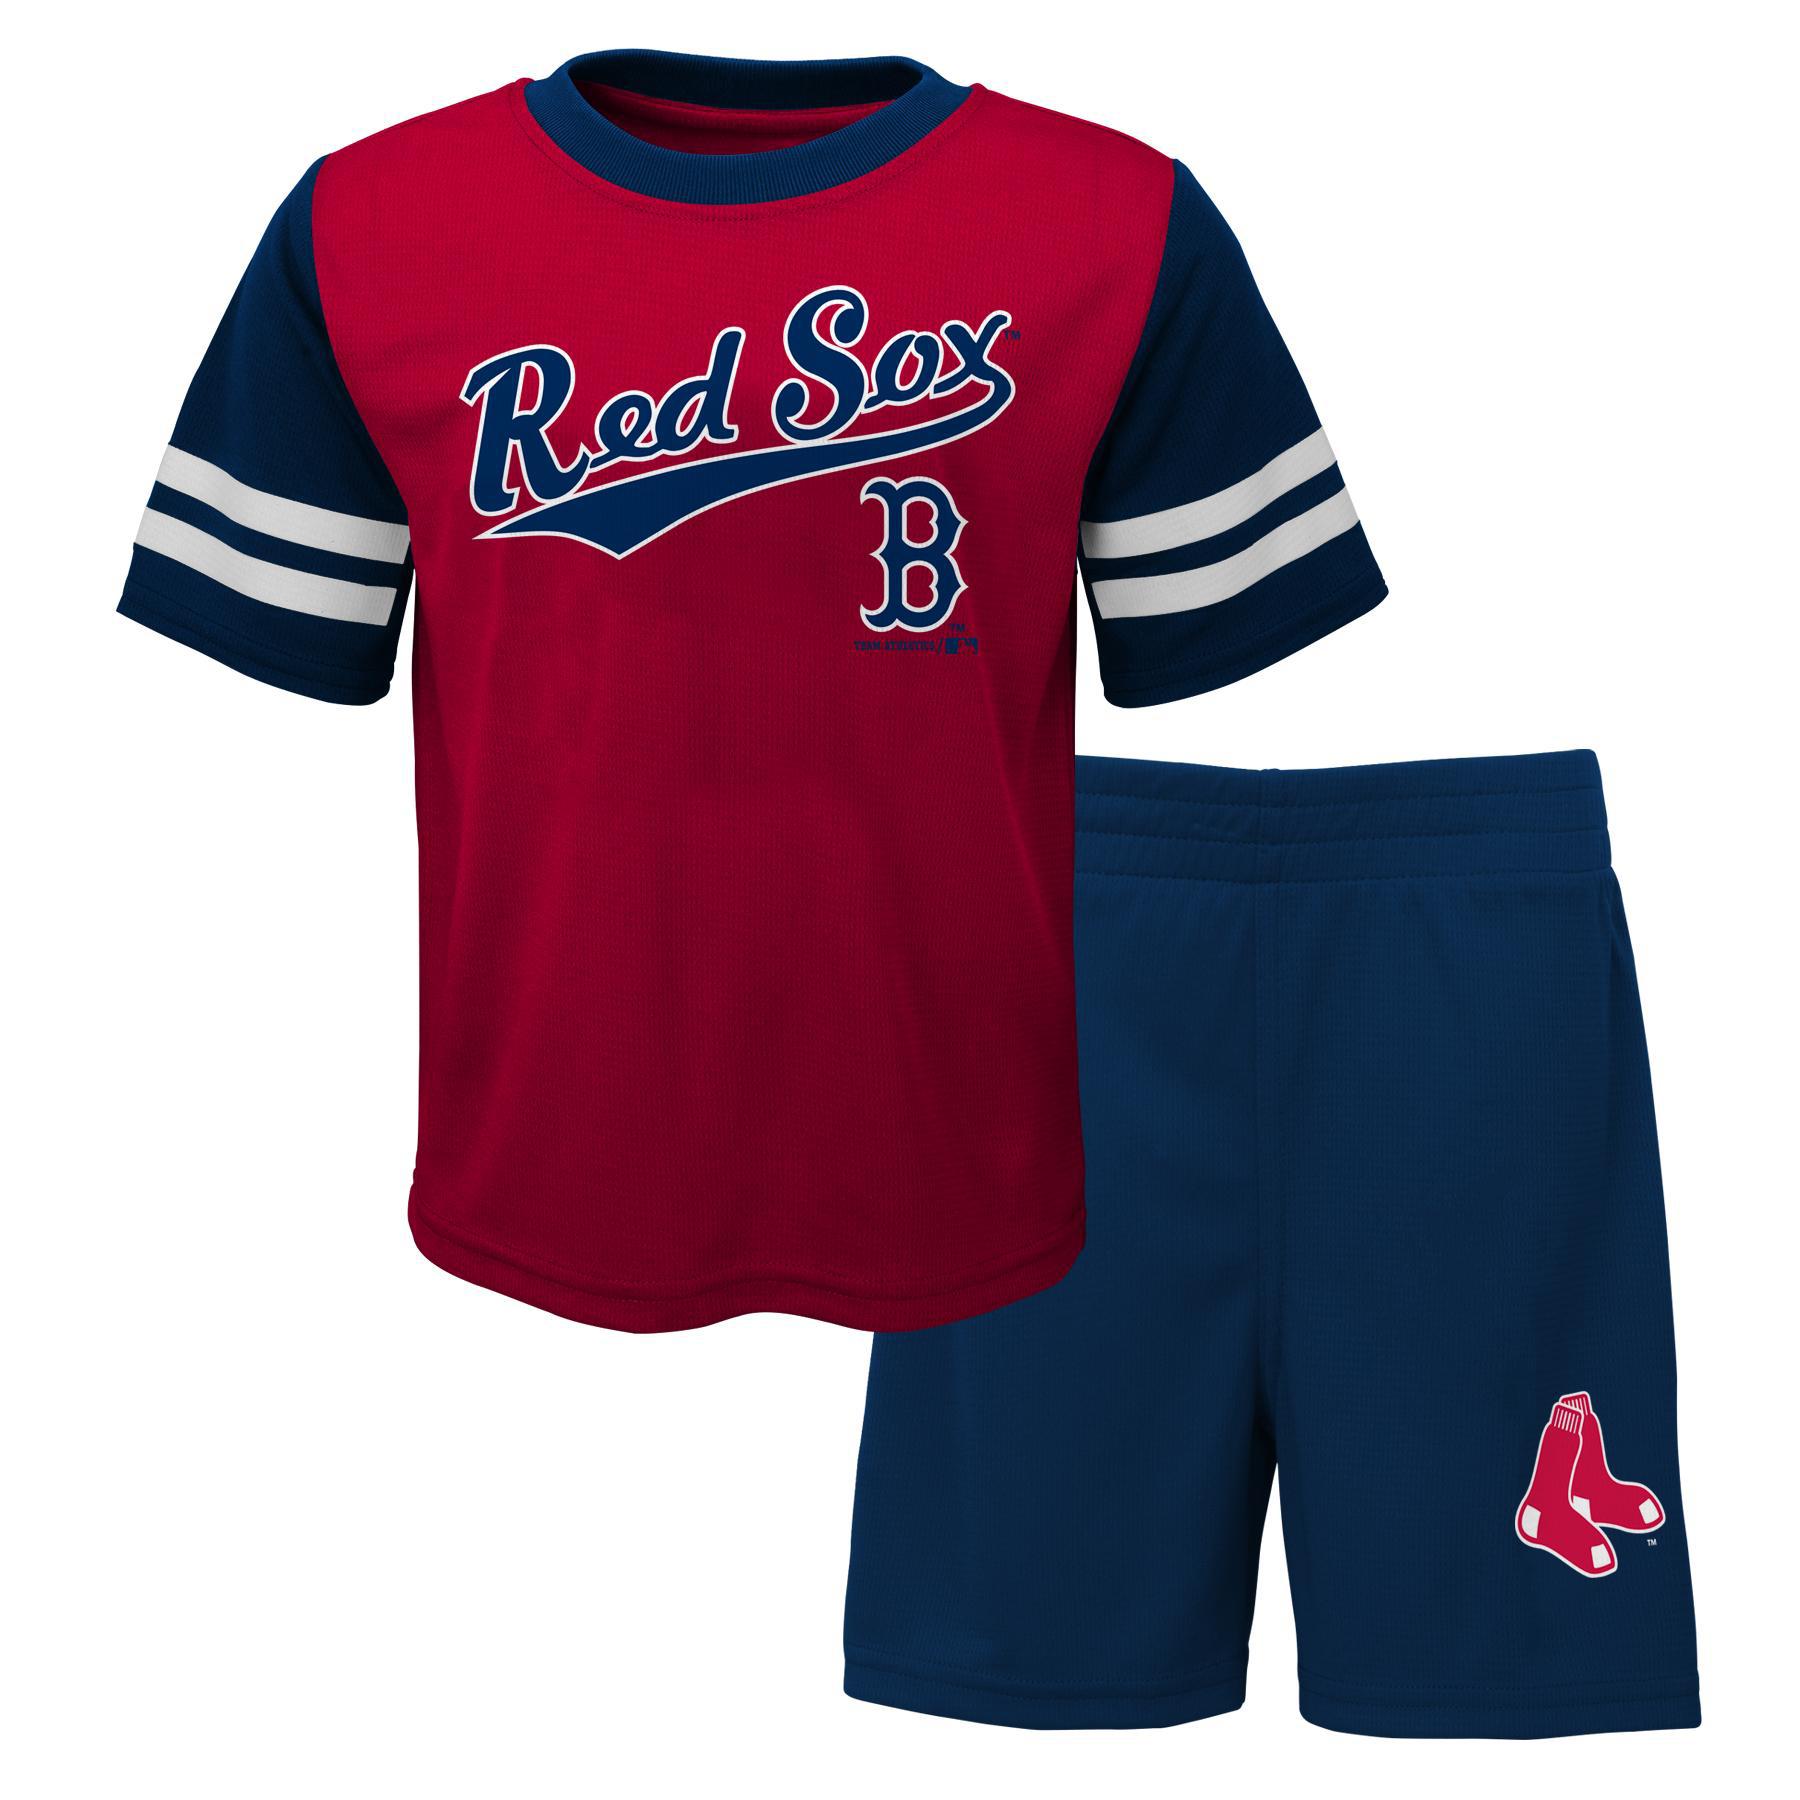 MLB Infant & Toddler Boy's T-Shirt & Shorts - Boston Red Sox